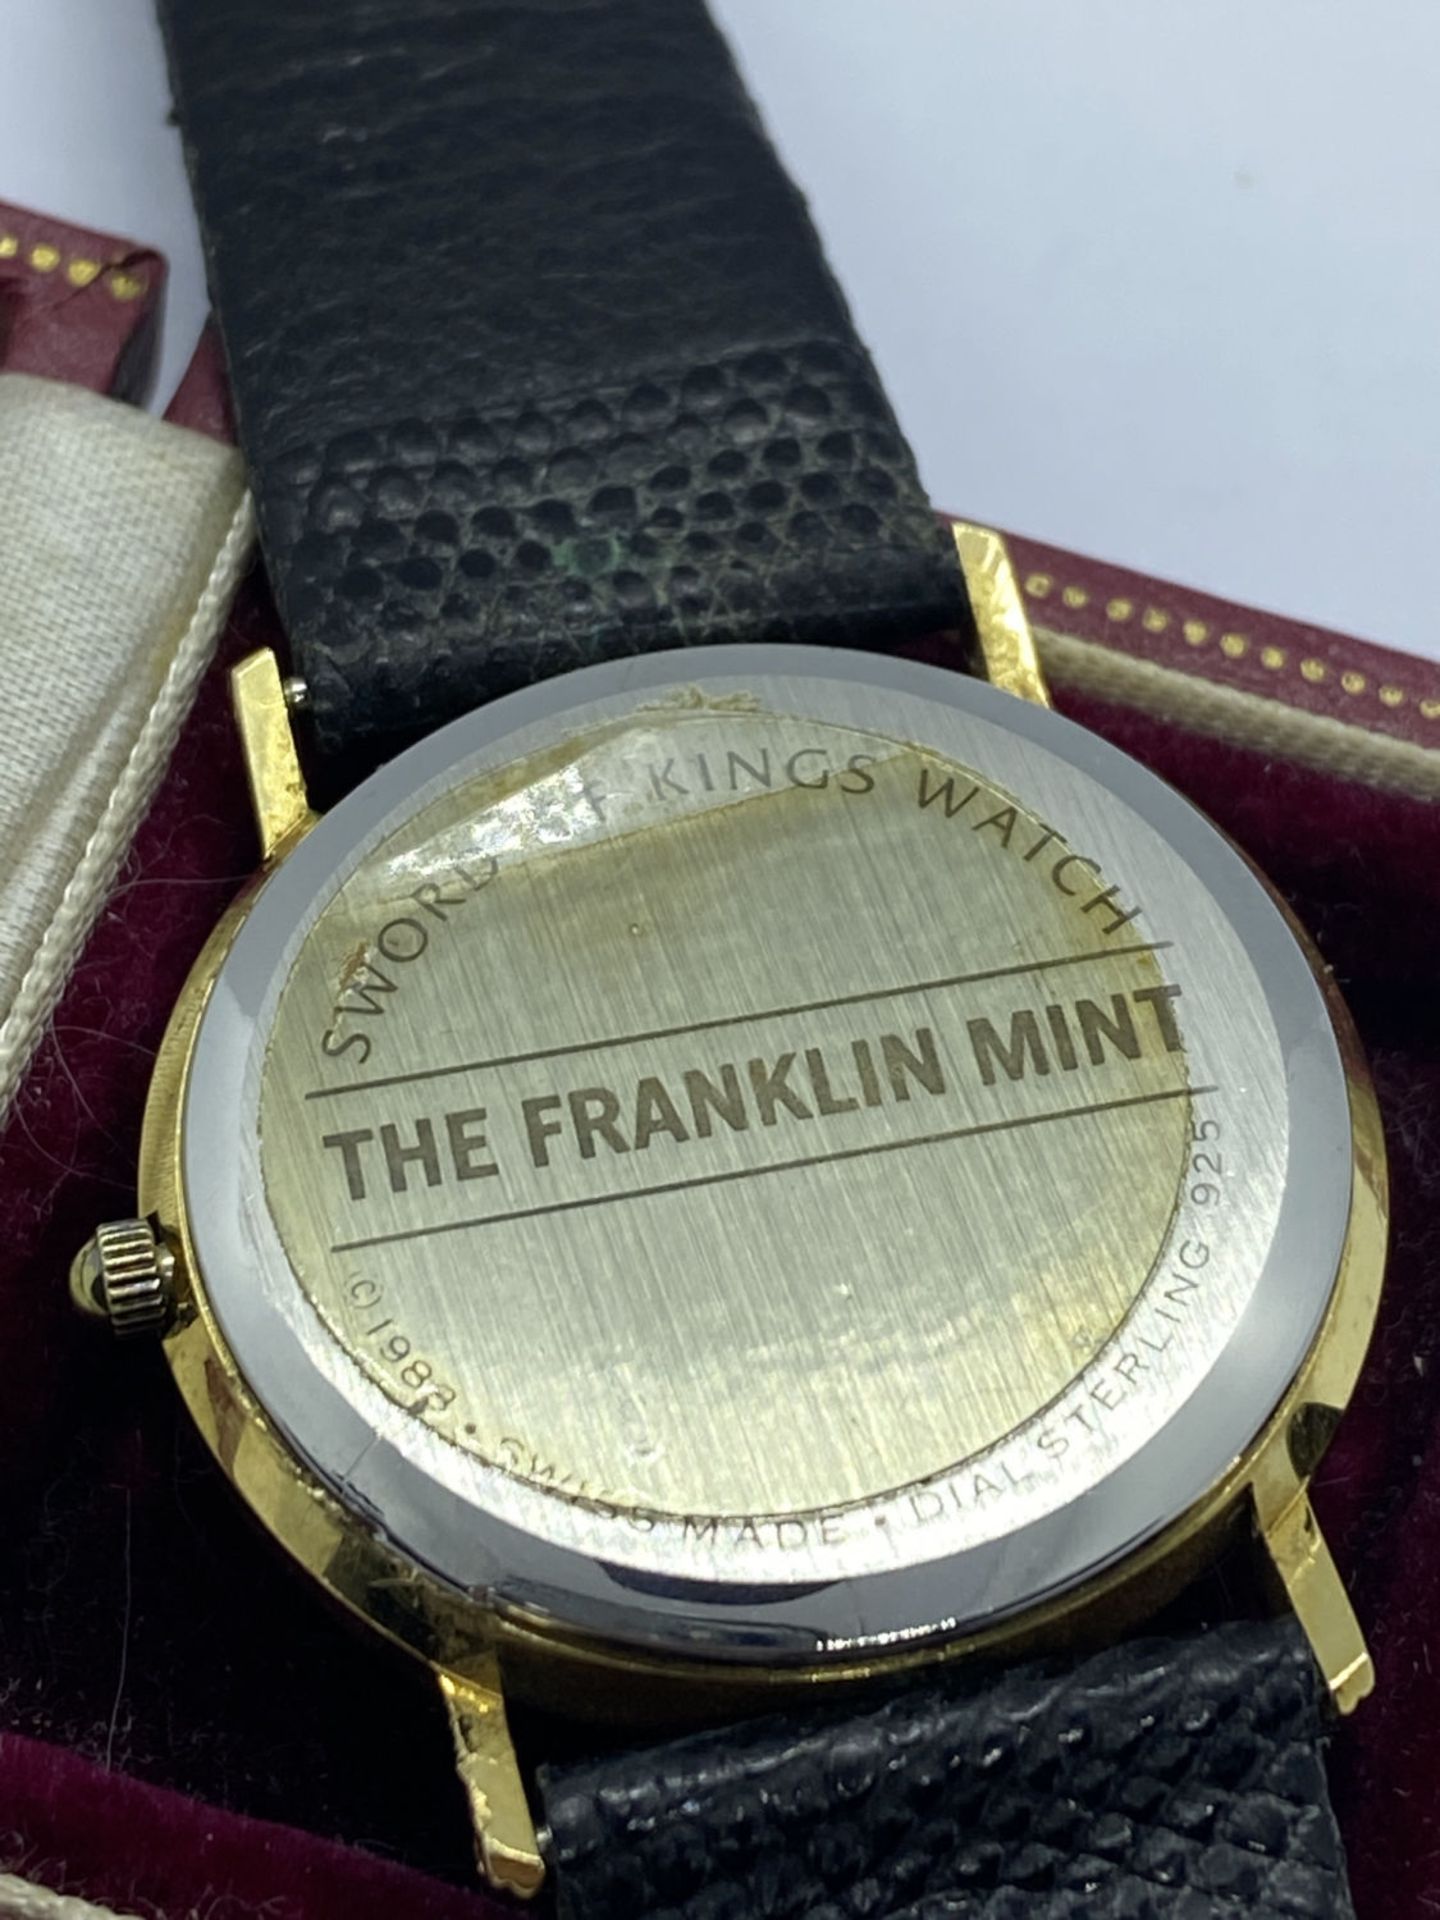 EXCALIBUR FRANKLIN MINT WATCH 32mm DIAMETER DIAL - Image 3 of 3